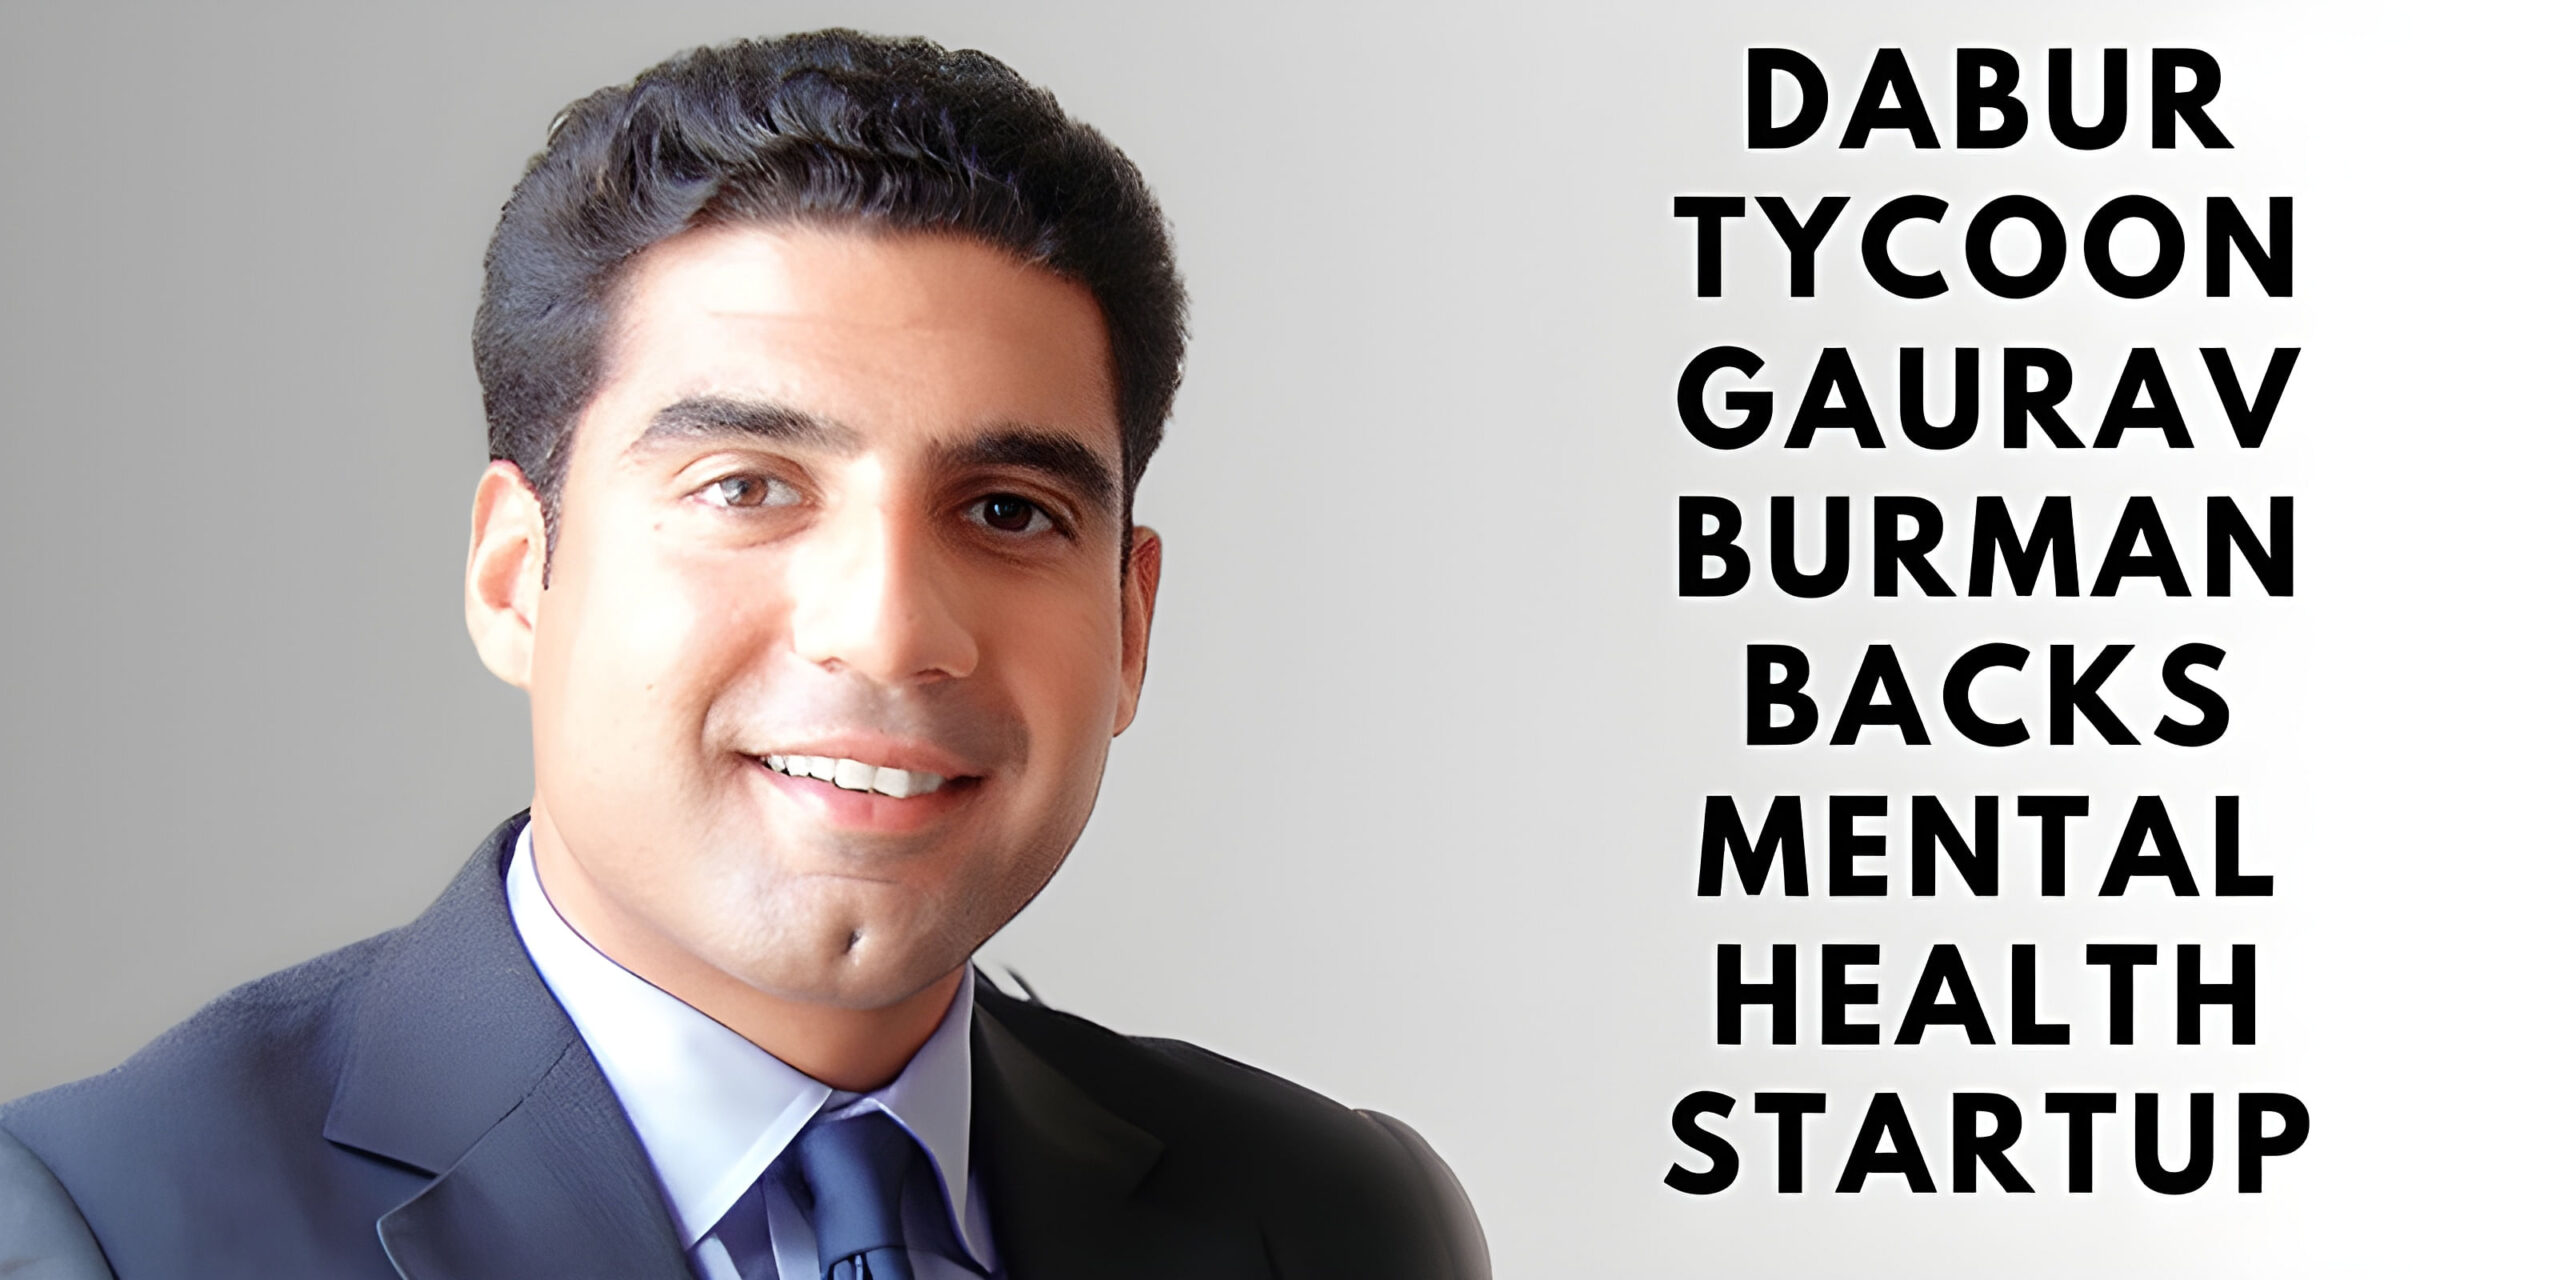 You are currently viewing Dabur Tycoon Gaurav Burman Backs Mental Health Startup